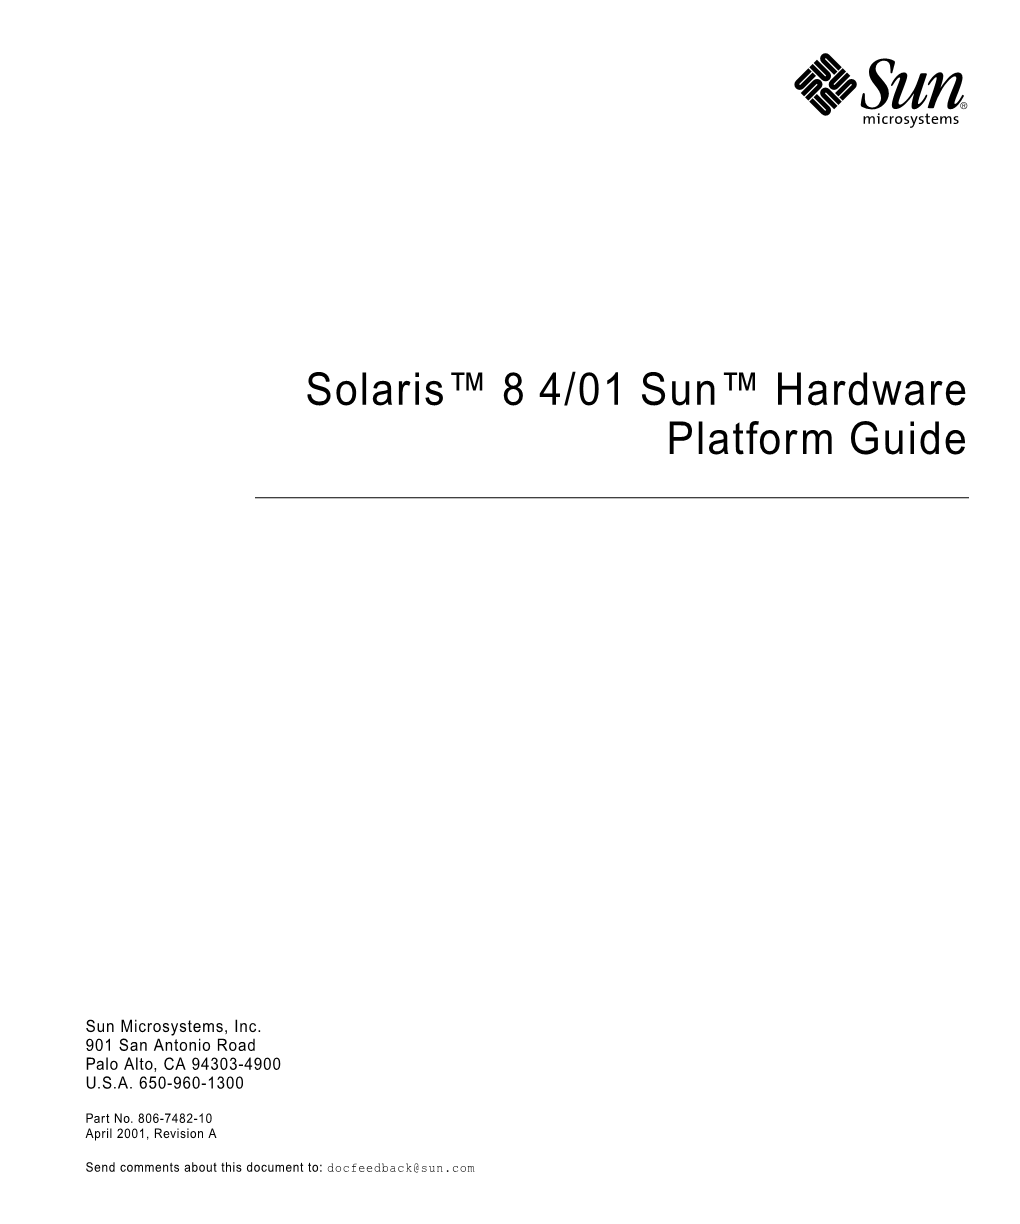 Solaris 8 4/01 Sun Hardware Platform Guide